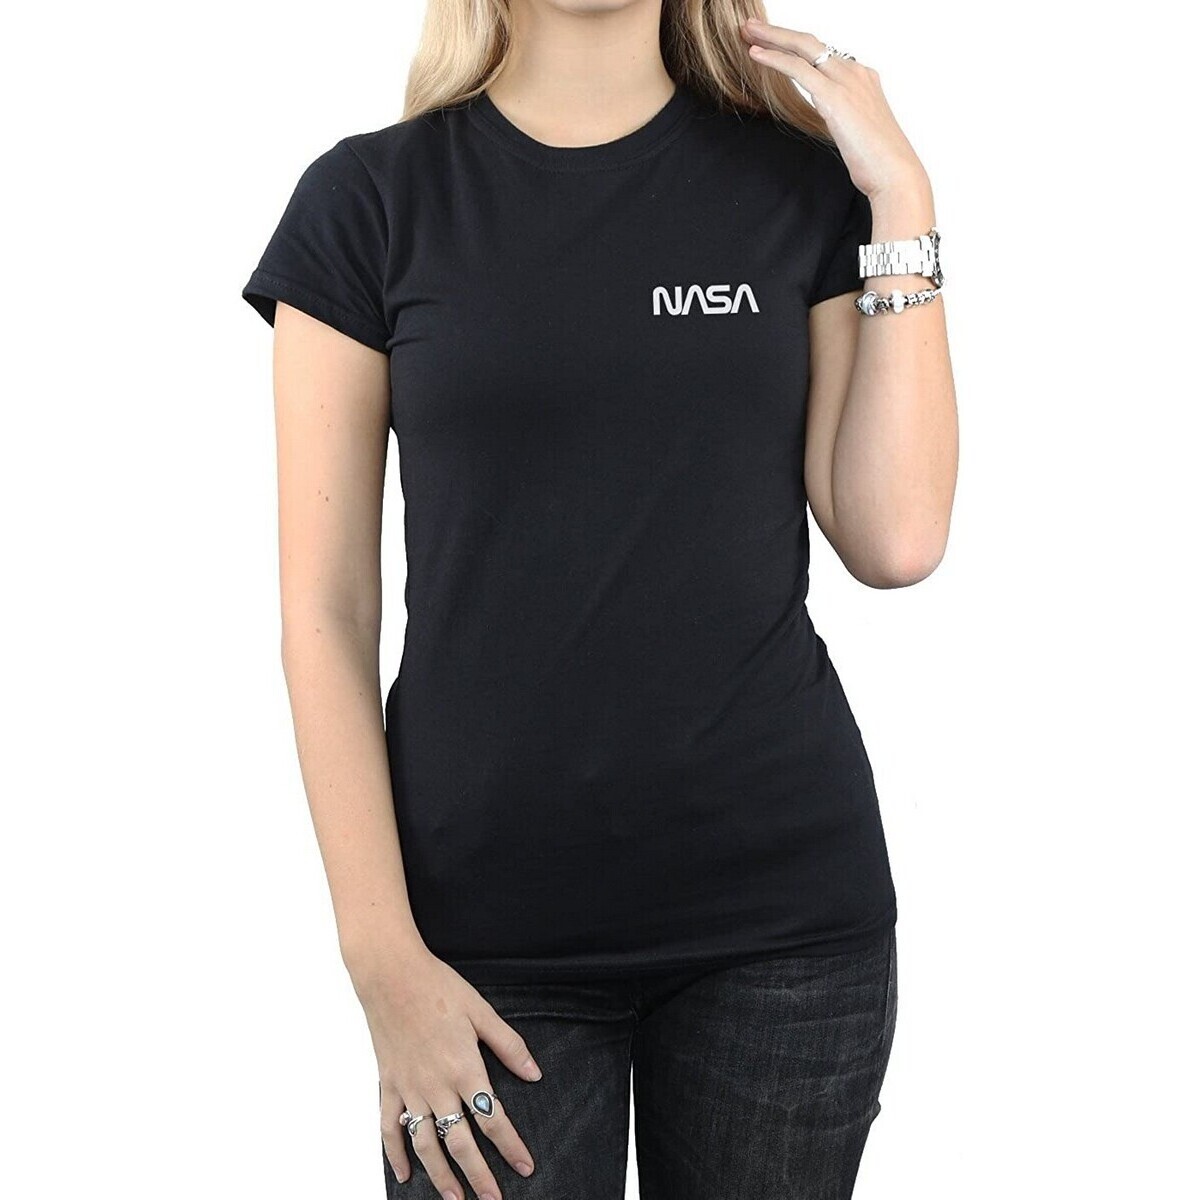 Vêtements Femme T-shirt básica tanto para vestido como para desporto Modern Noir